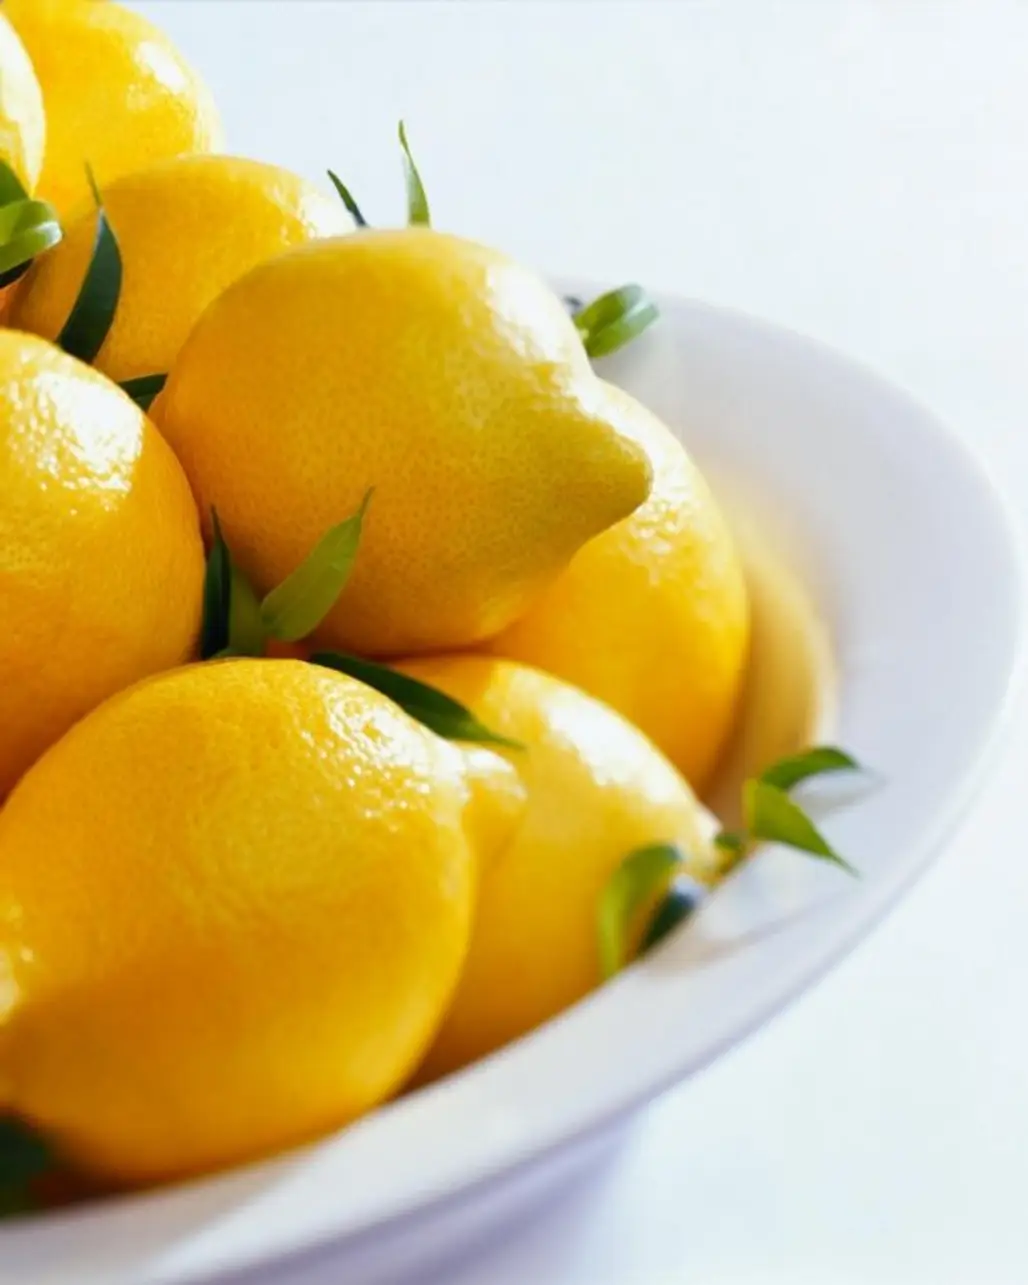 Sunkist Lemons Aren’t Really Yellow